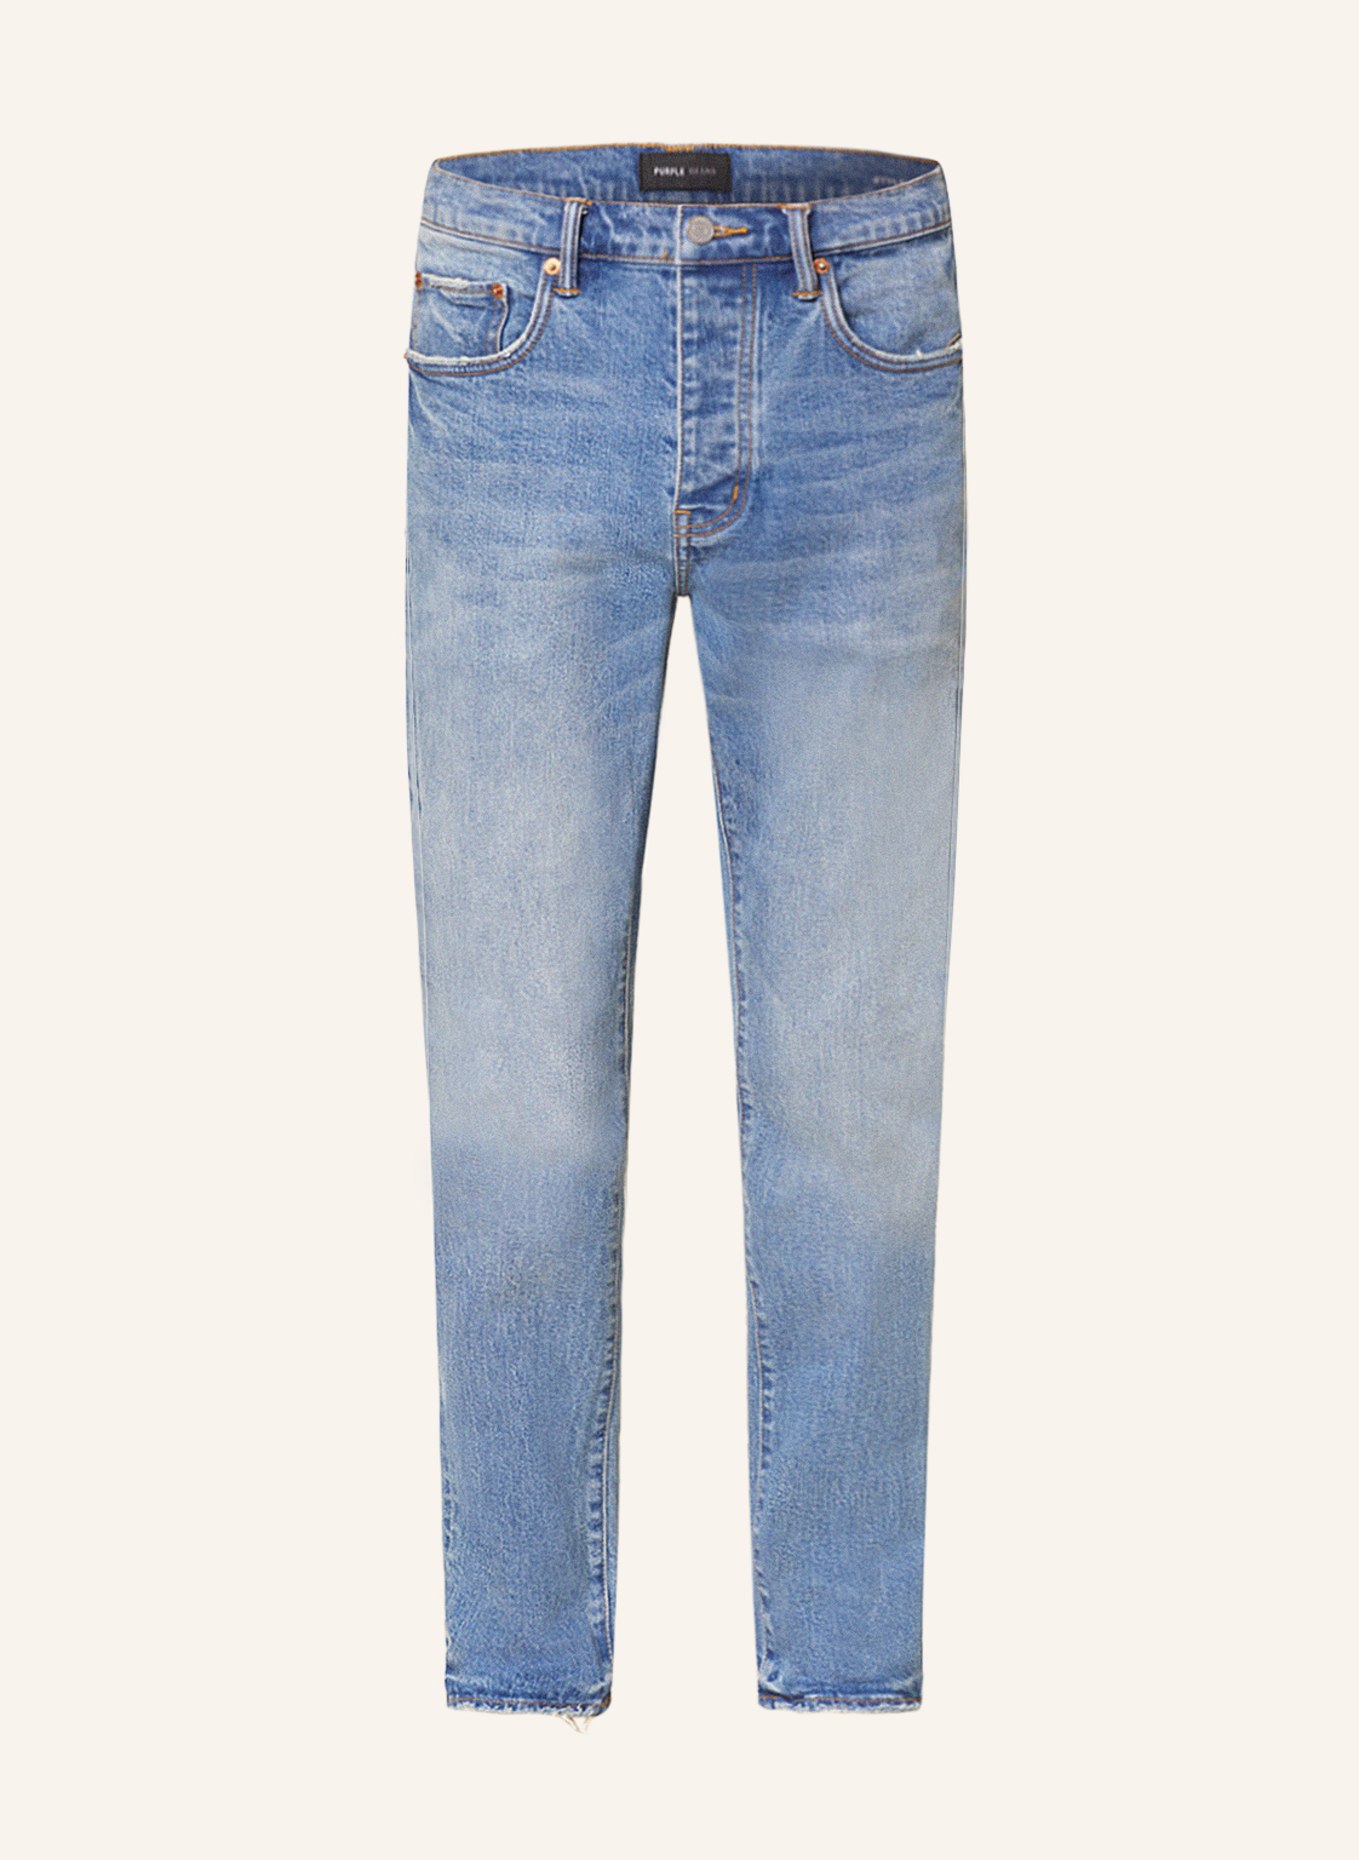 PURPLE BRAND Jeans slim fit in lwoi light worn out indigo